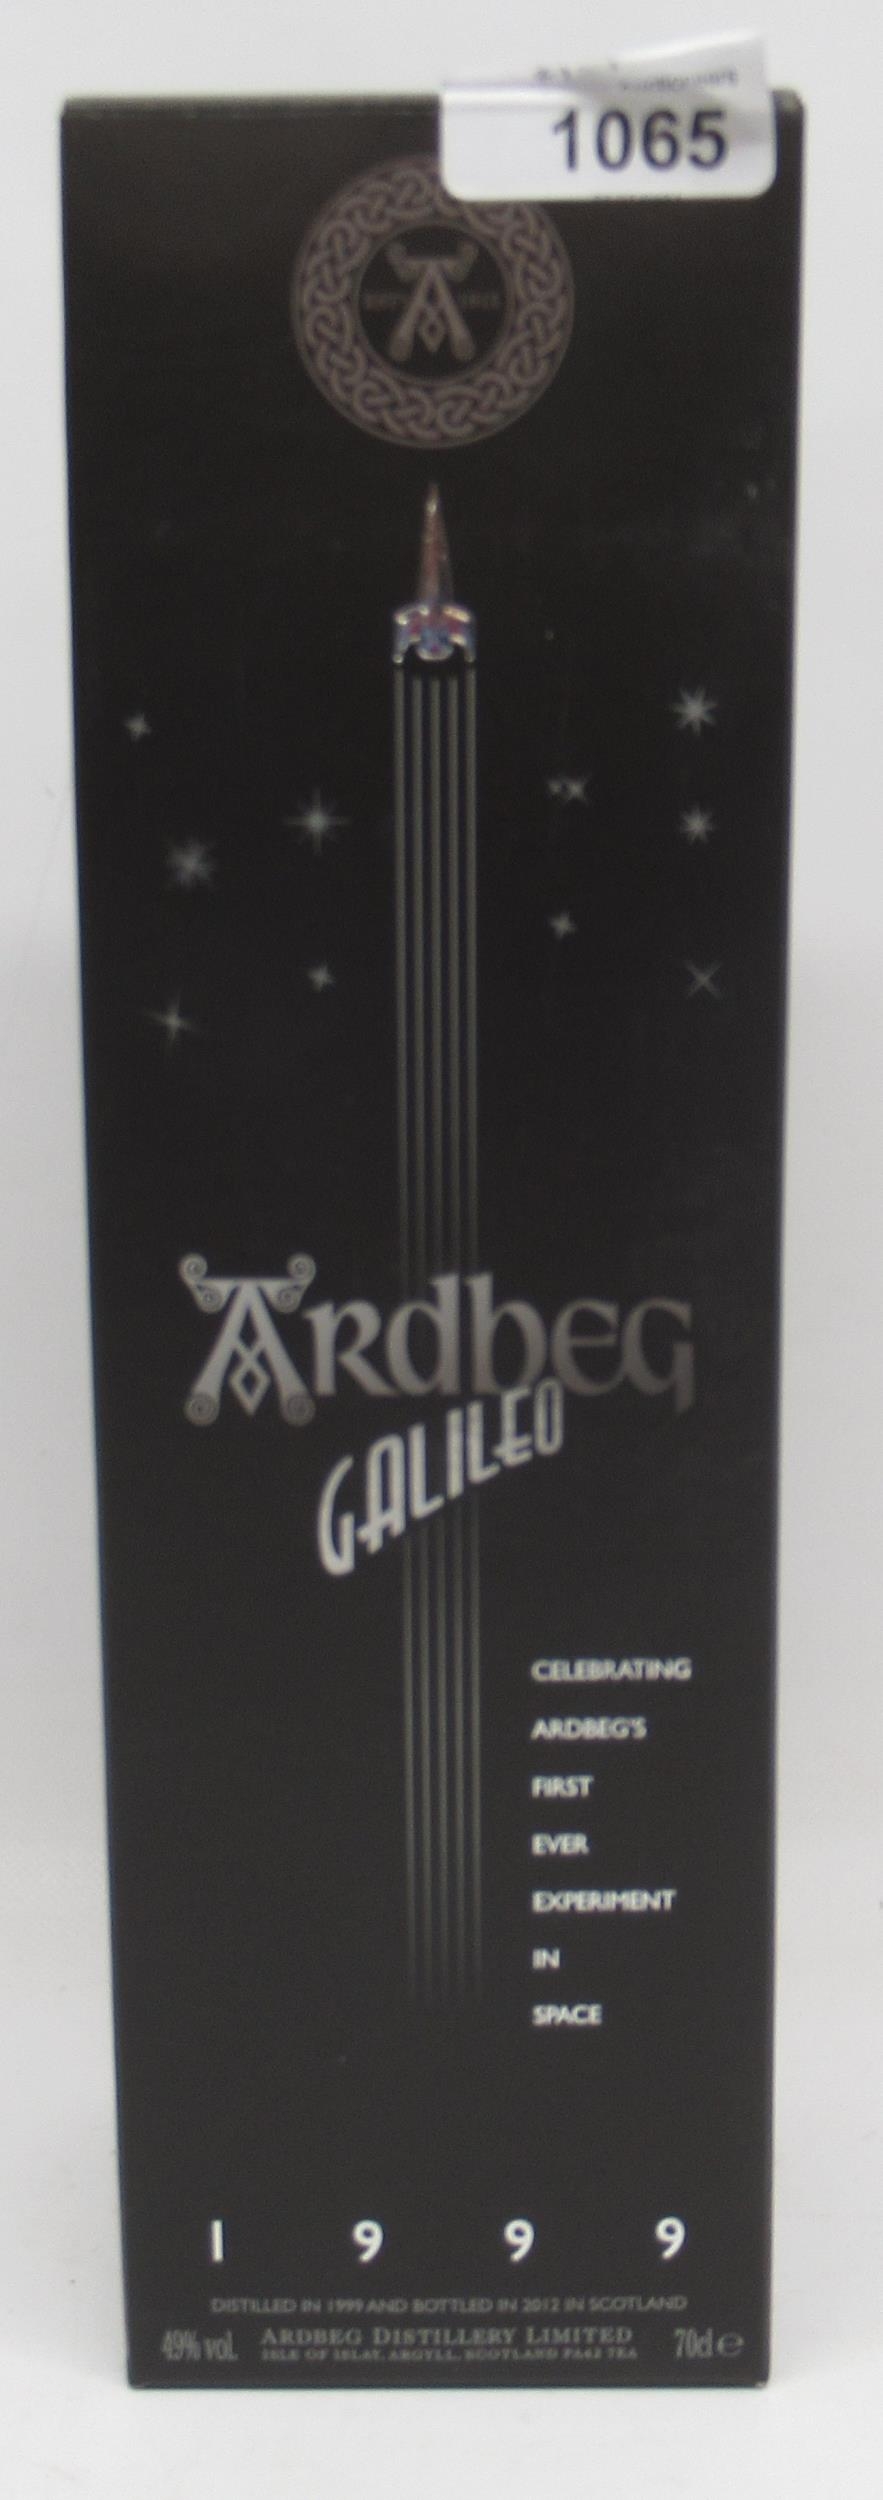 Ardbeg Distillery, Ardbeg Galileo 1999, Islay single malt whisky, 49%, 70cl bottle - Image 2 of 2